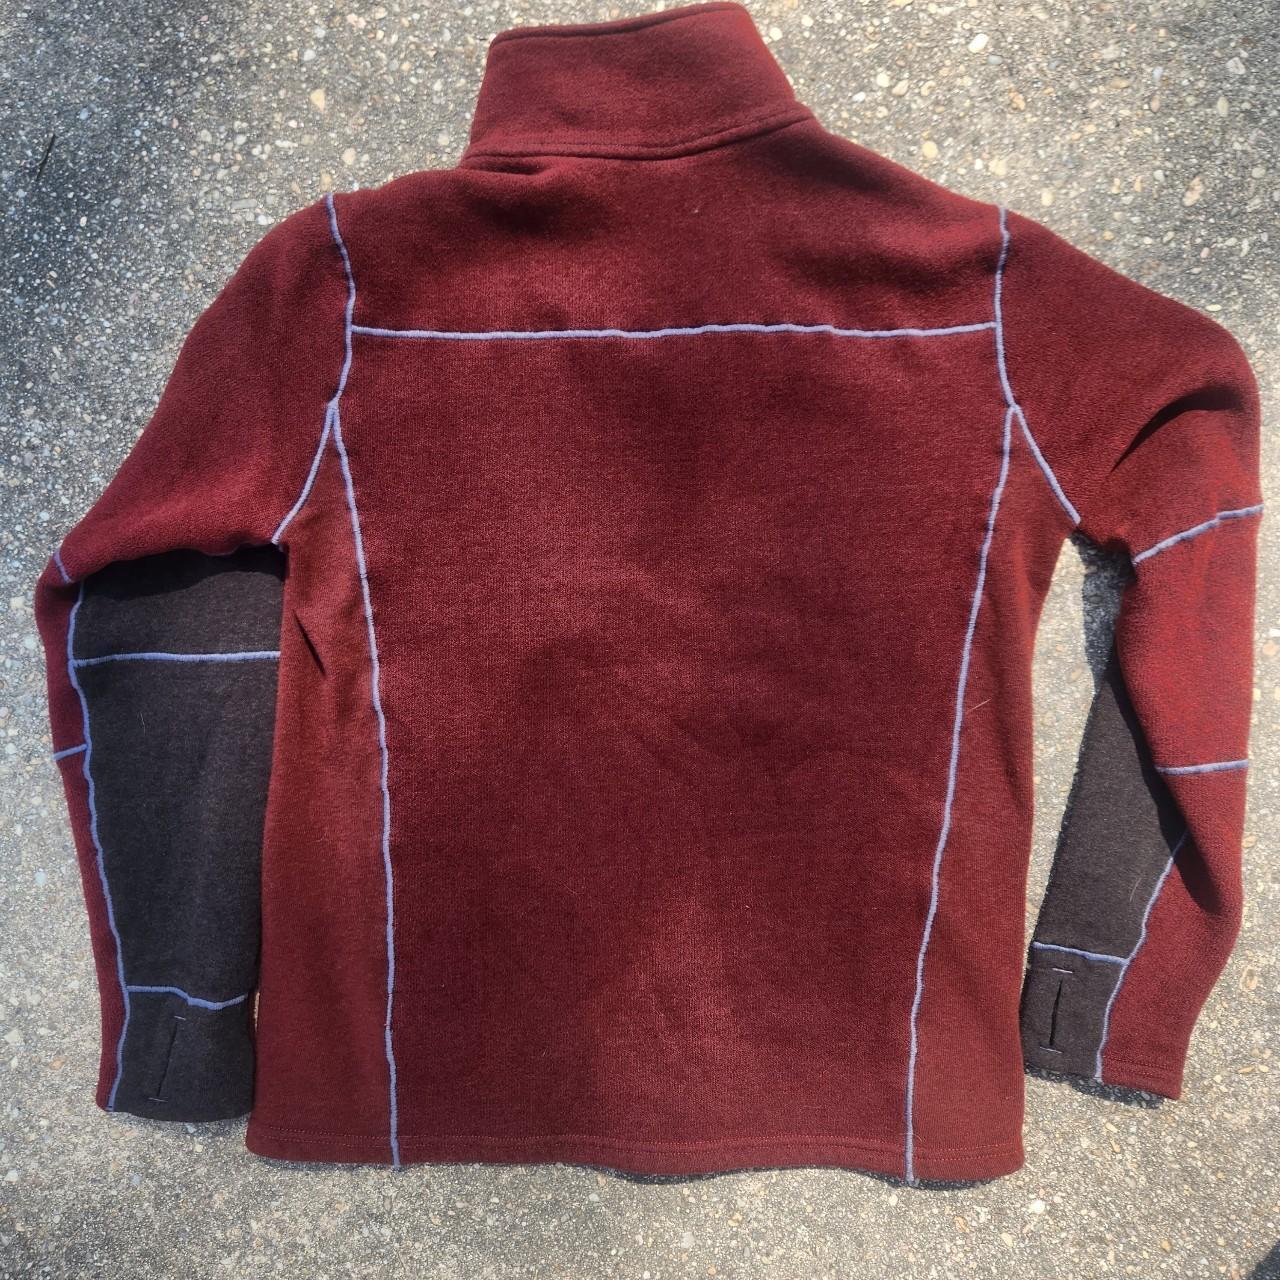 Kuhl Alfpaca men's sweater, size medium, in great - Depop